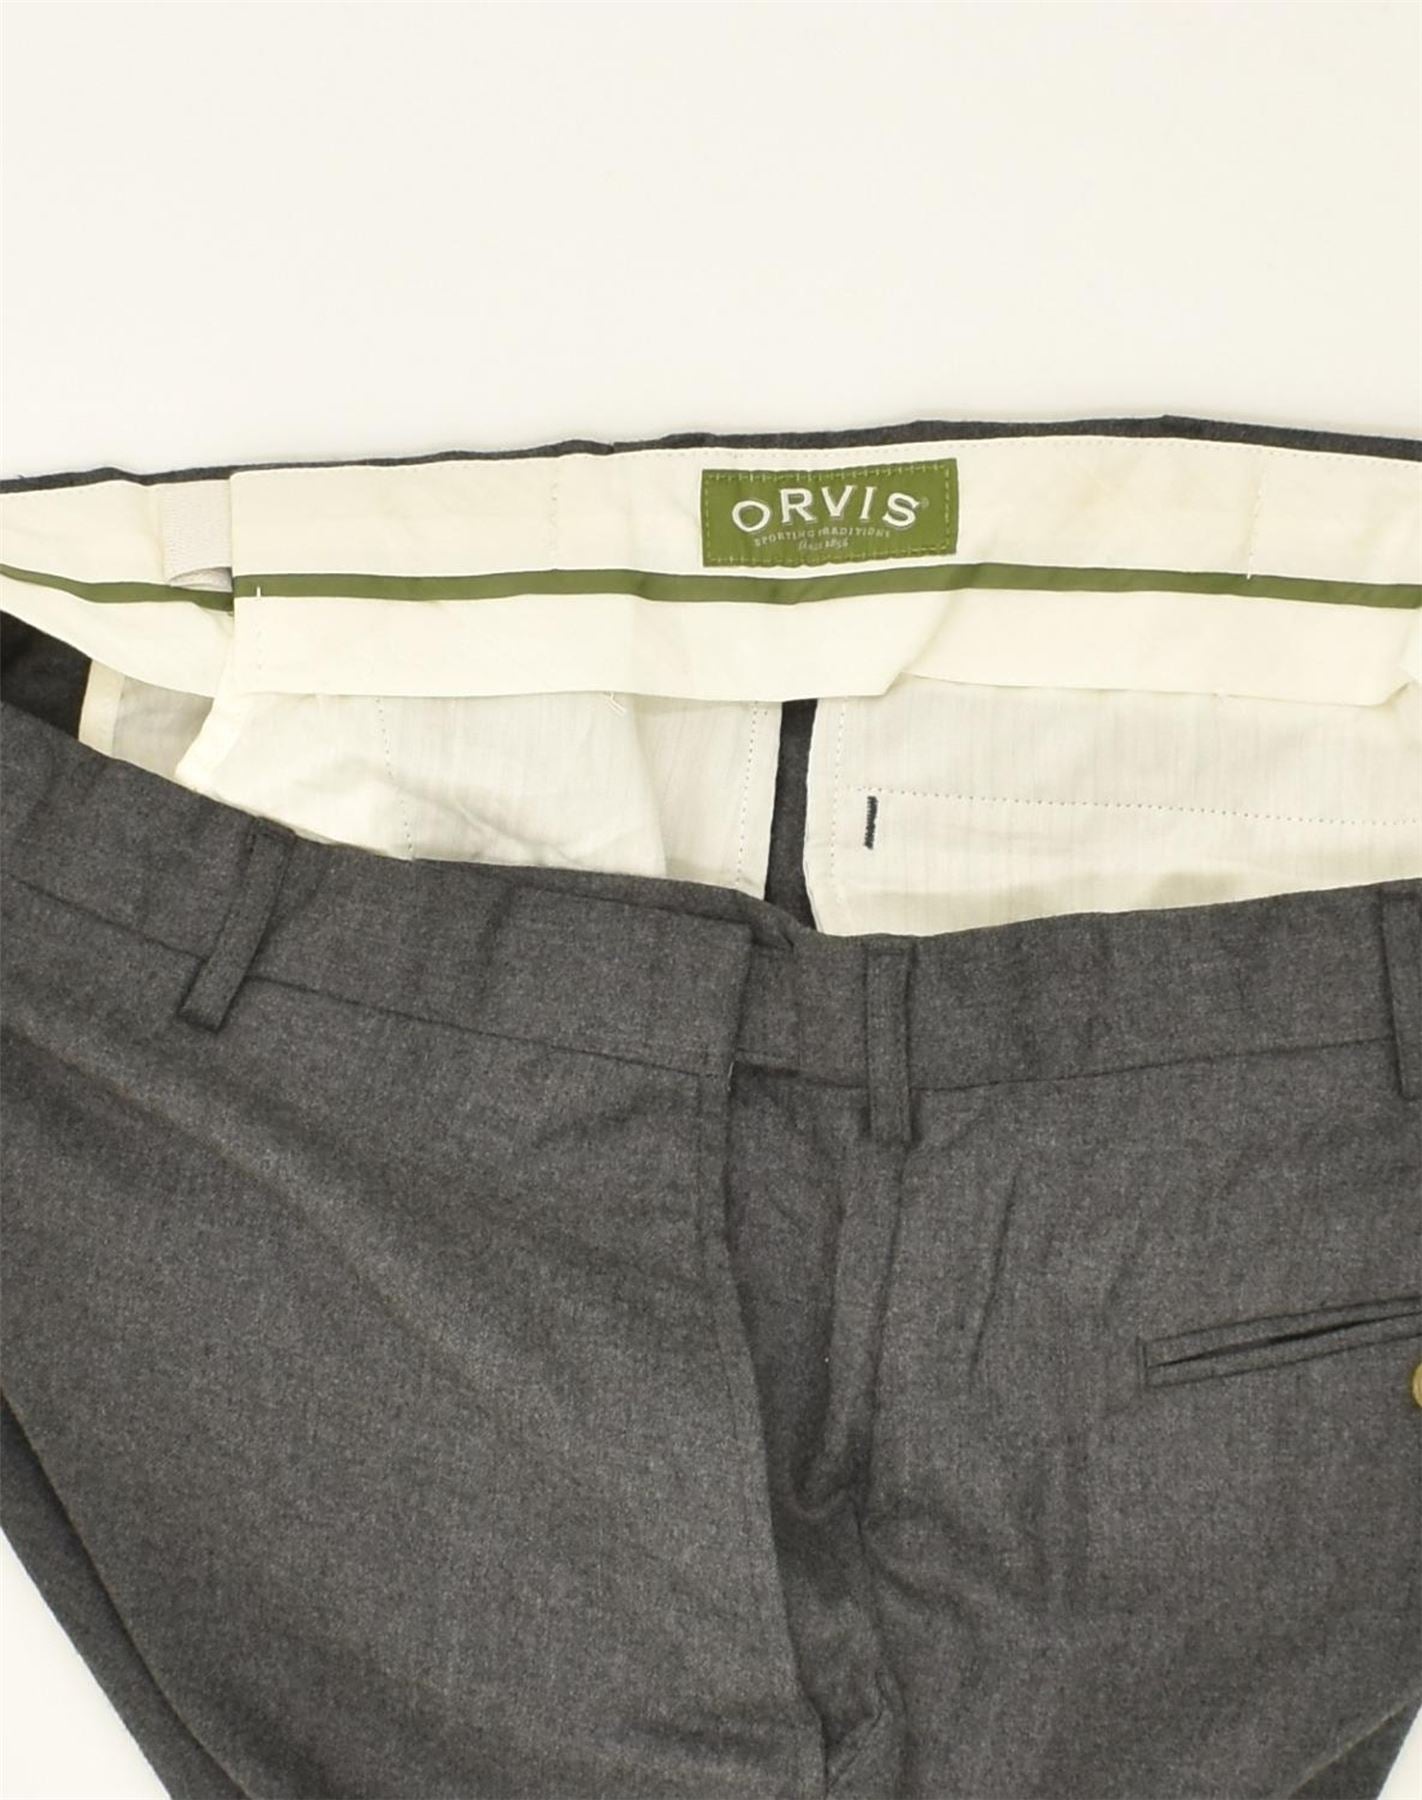 Lovat Moleskin pants - Orvis | Mens kurta designs, Pants, Outwear fashion